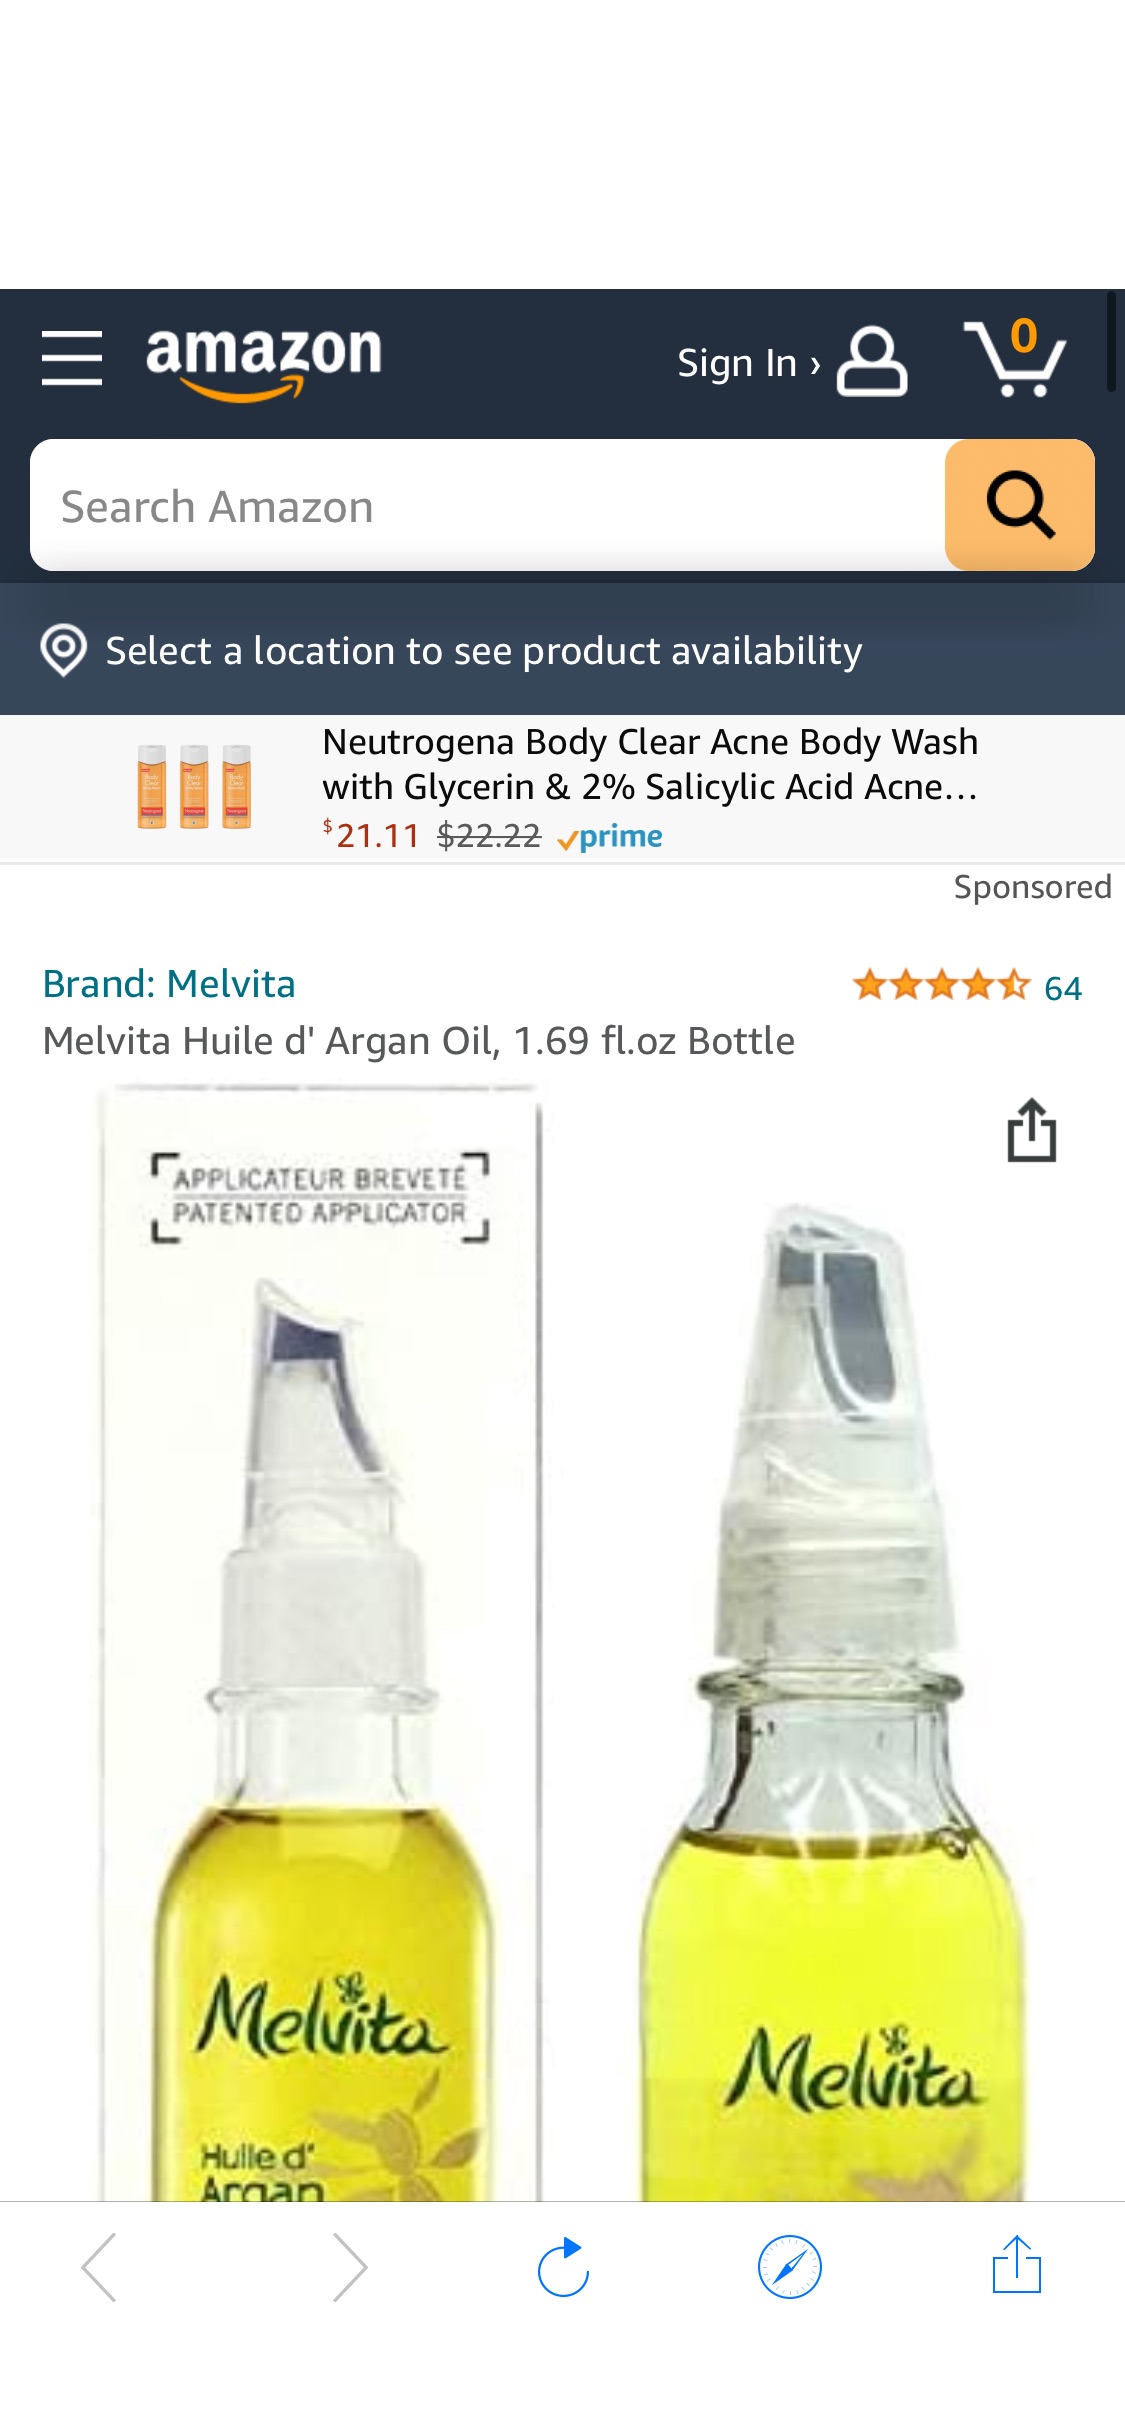 Amazon.com : Melvita Huile d' Argan Oil, 1.69 fl.oz Bottle